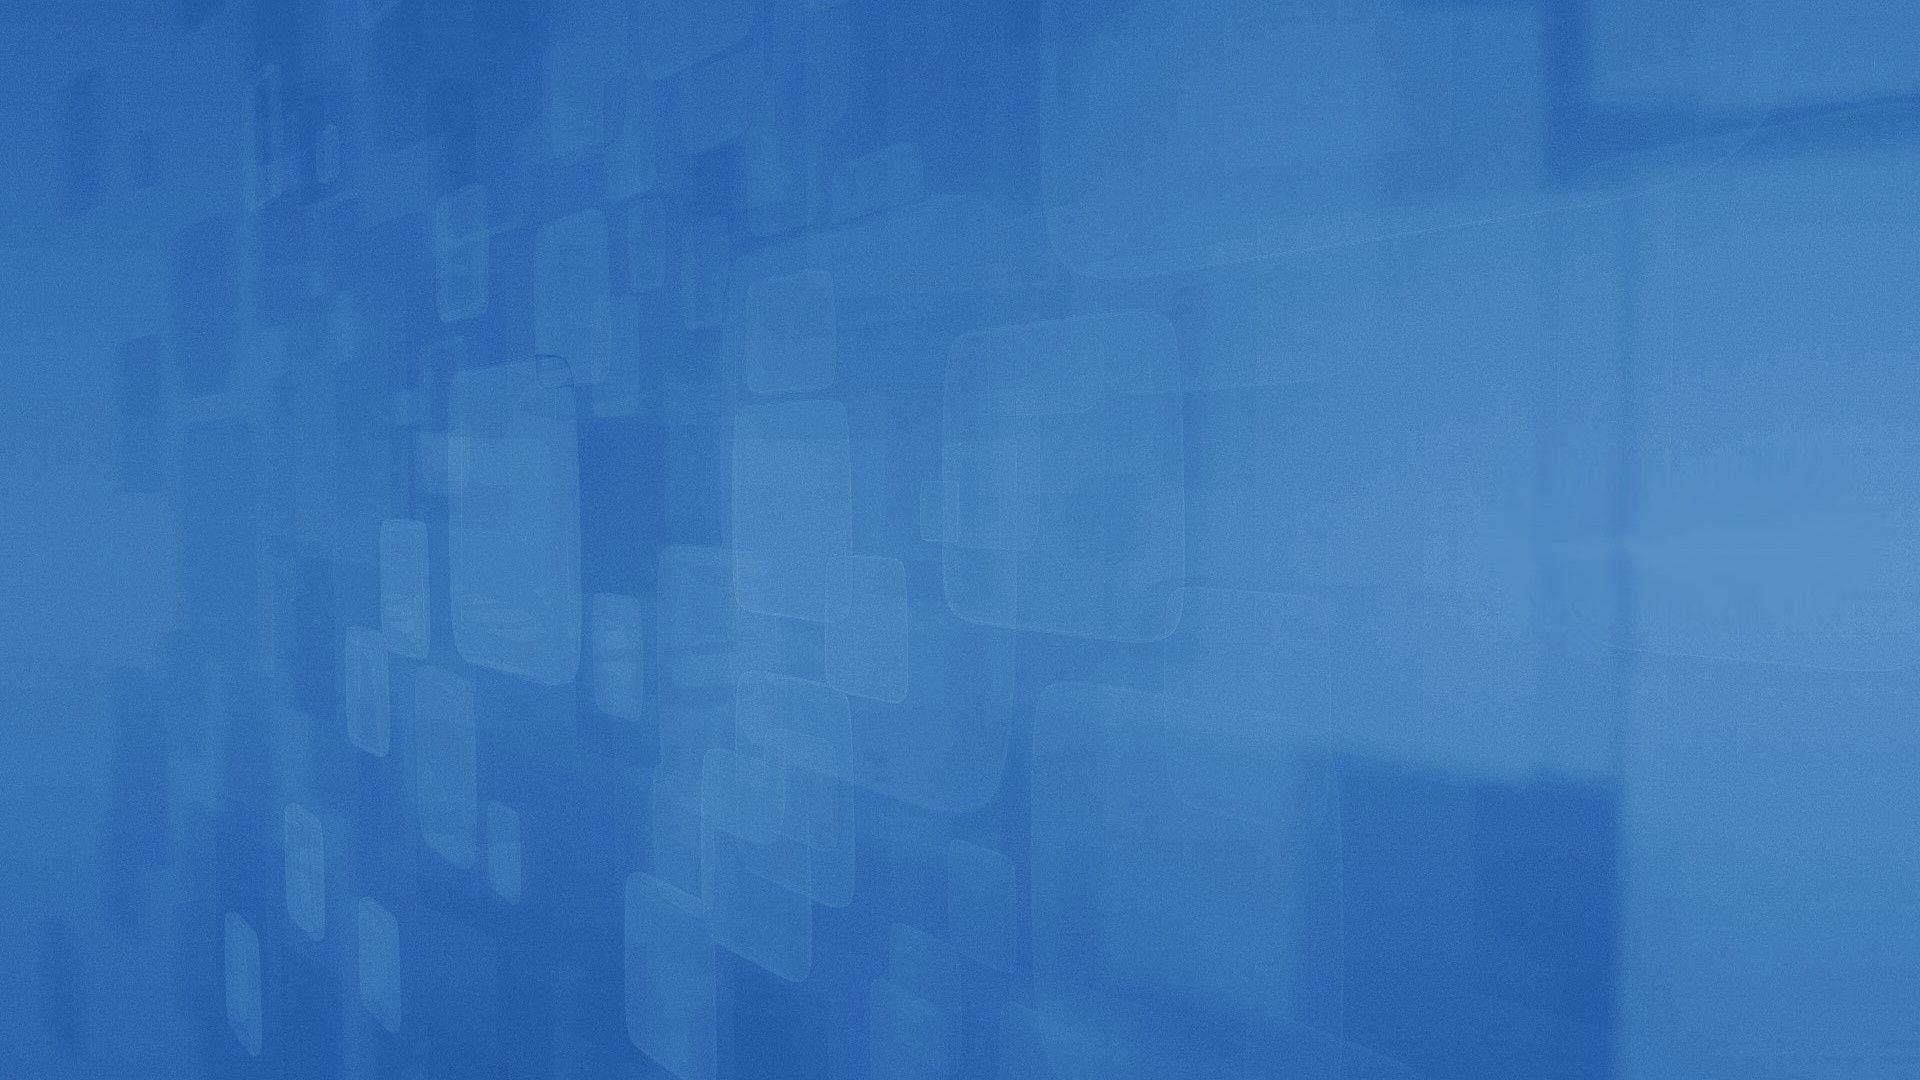 COMPAQ light blue desktop PC and Mac wallpaper